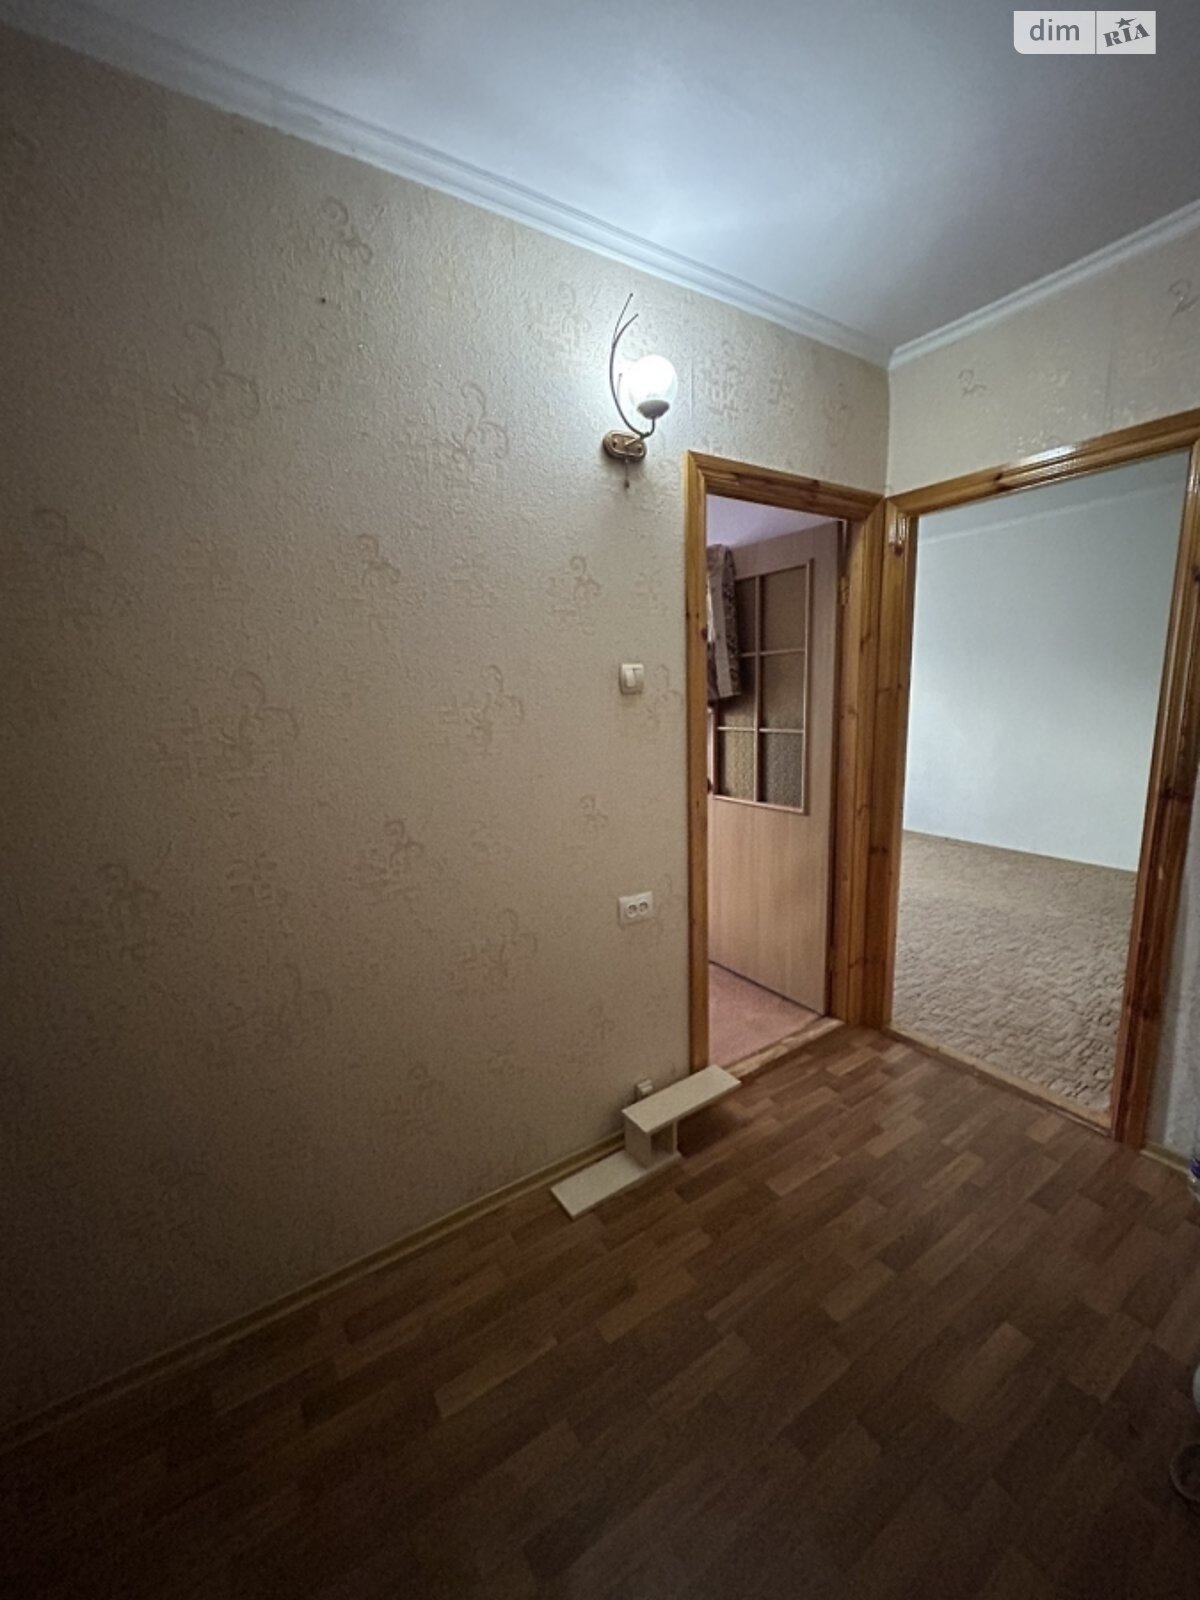 Продажа двухкомнатной квартиры в Житомире, на ул. Тена Бориса 102, район Промавтоматика фото 1